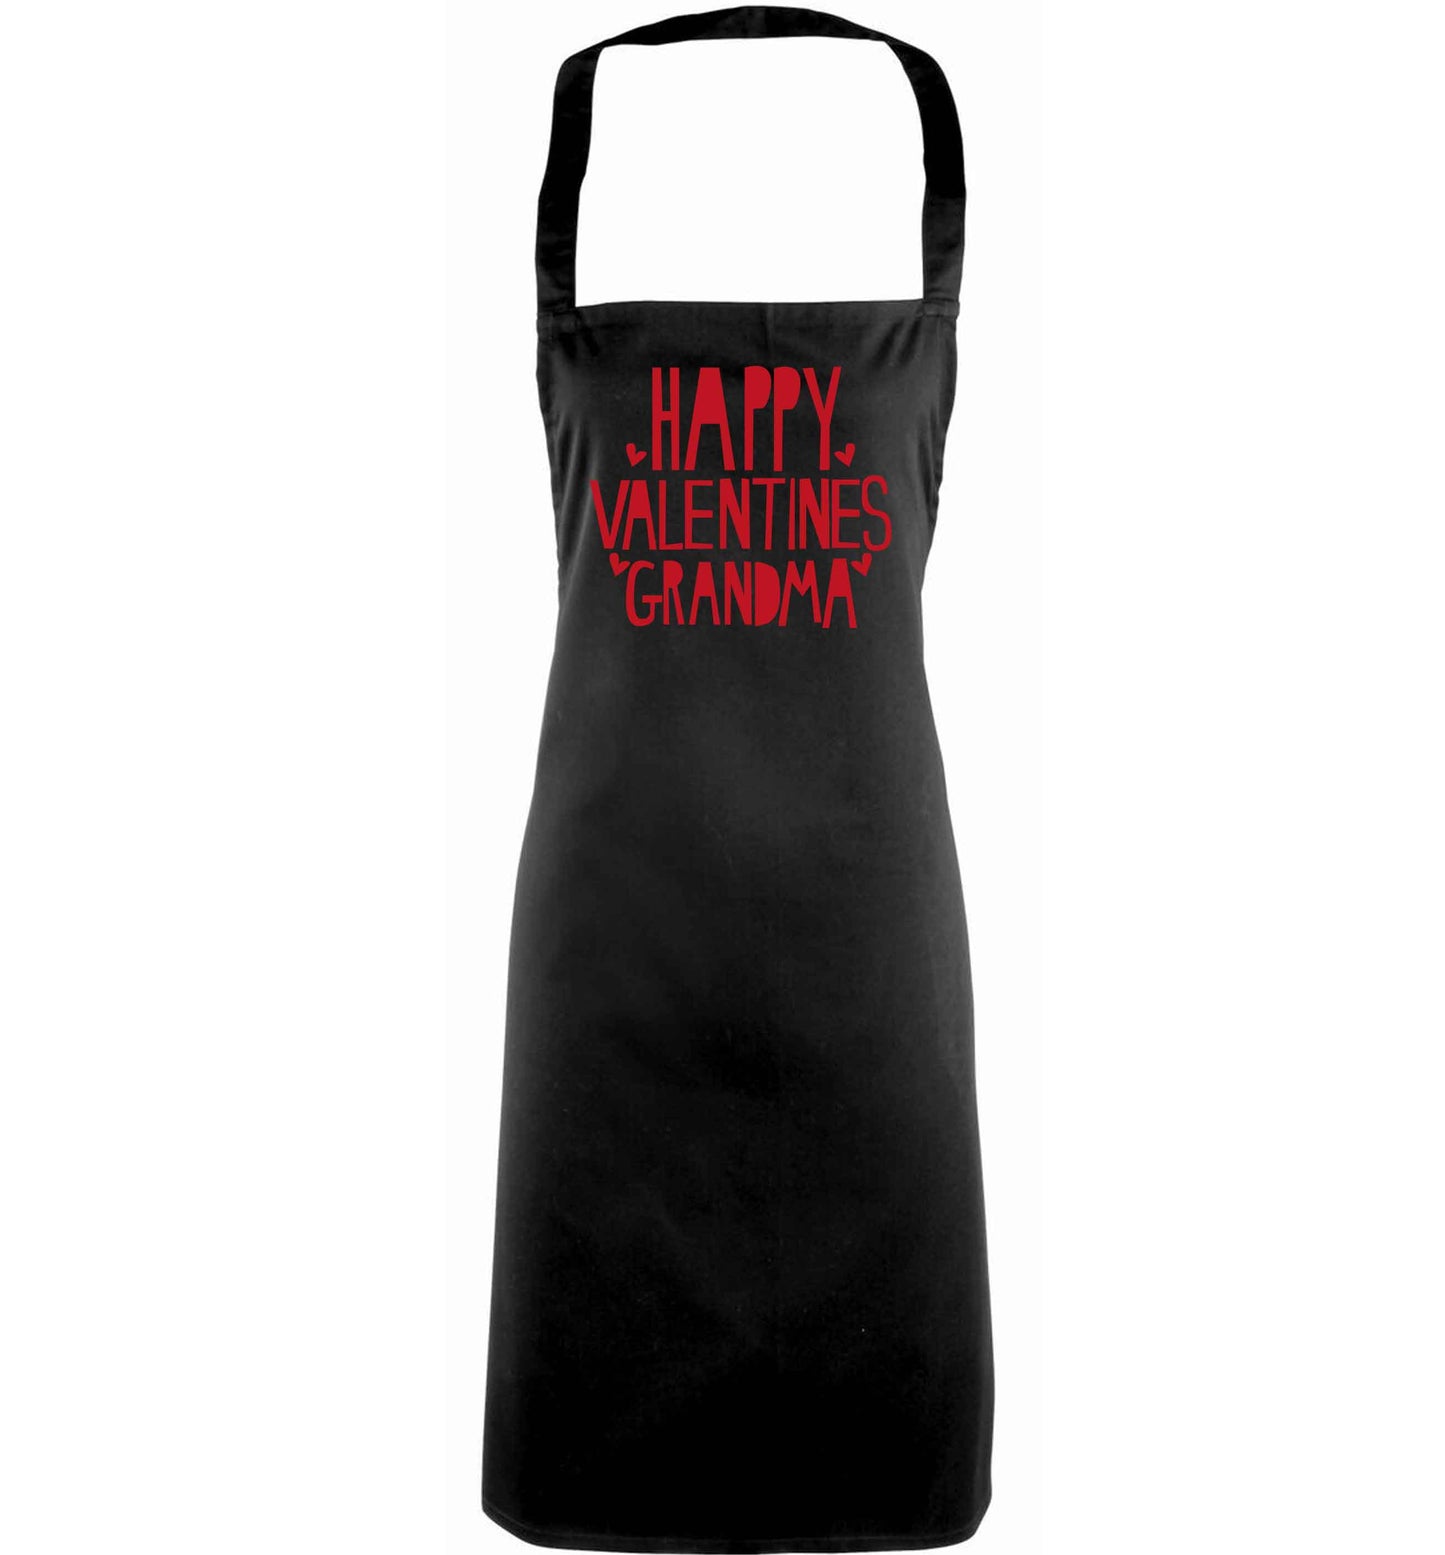 Happy valentines grandma adults black apron